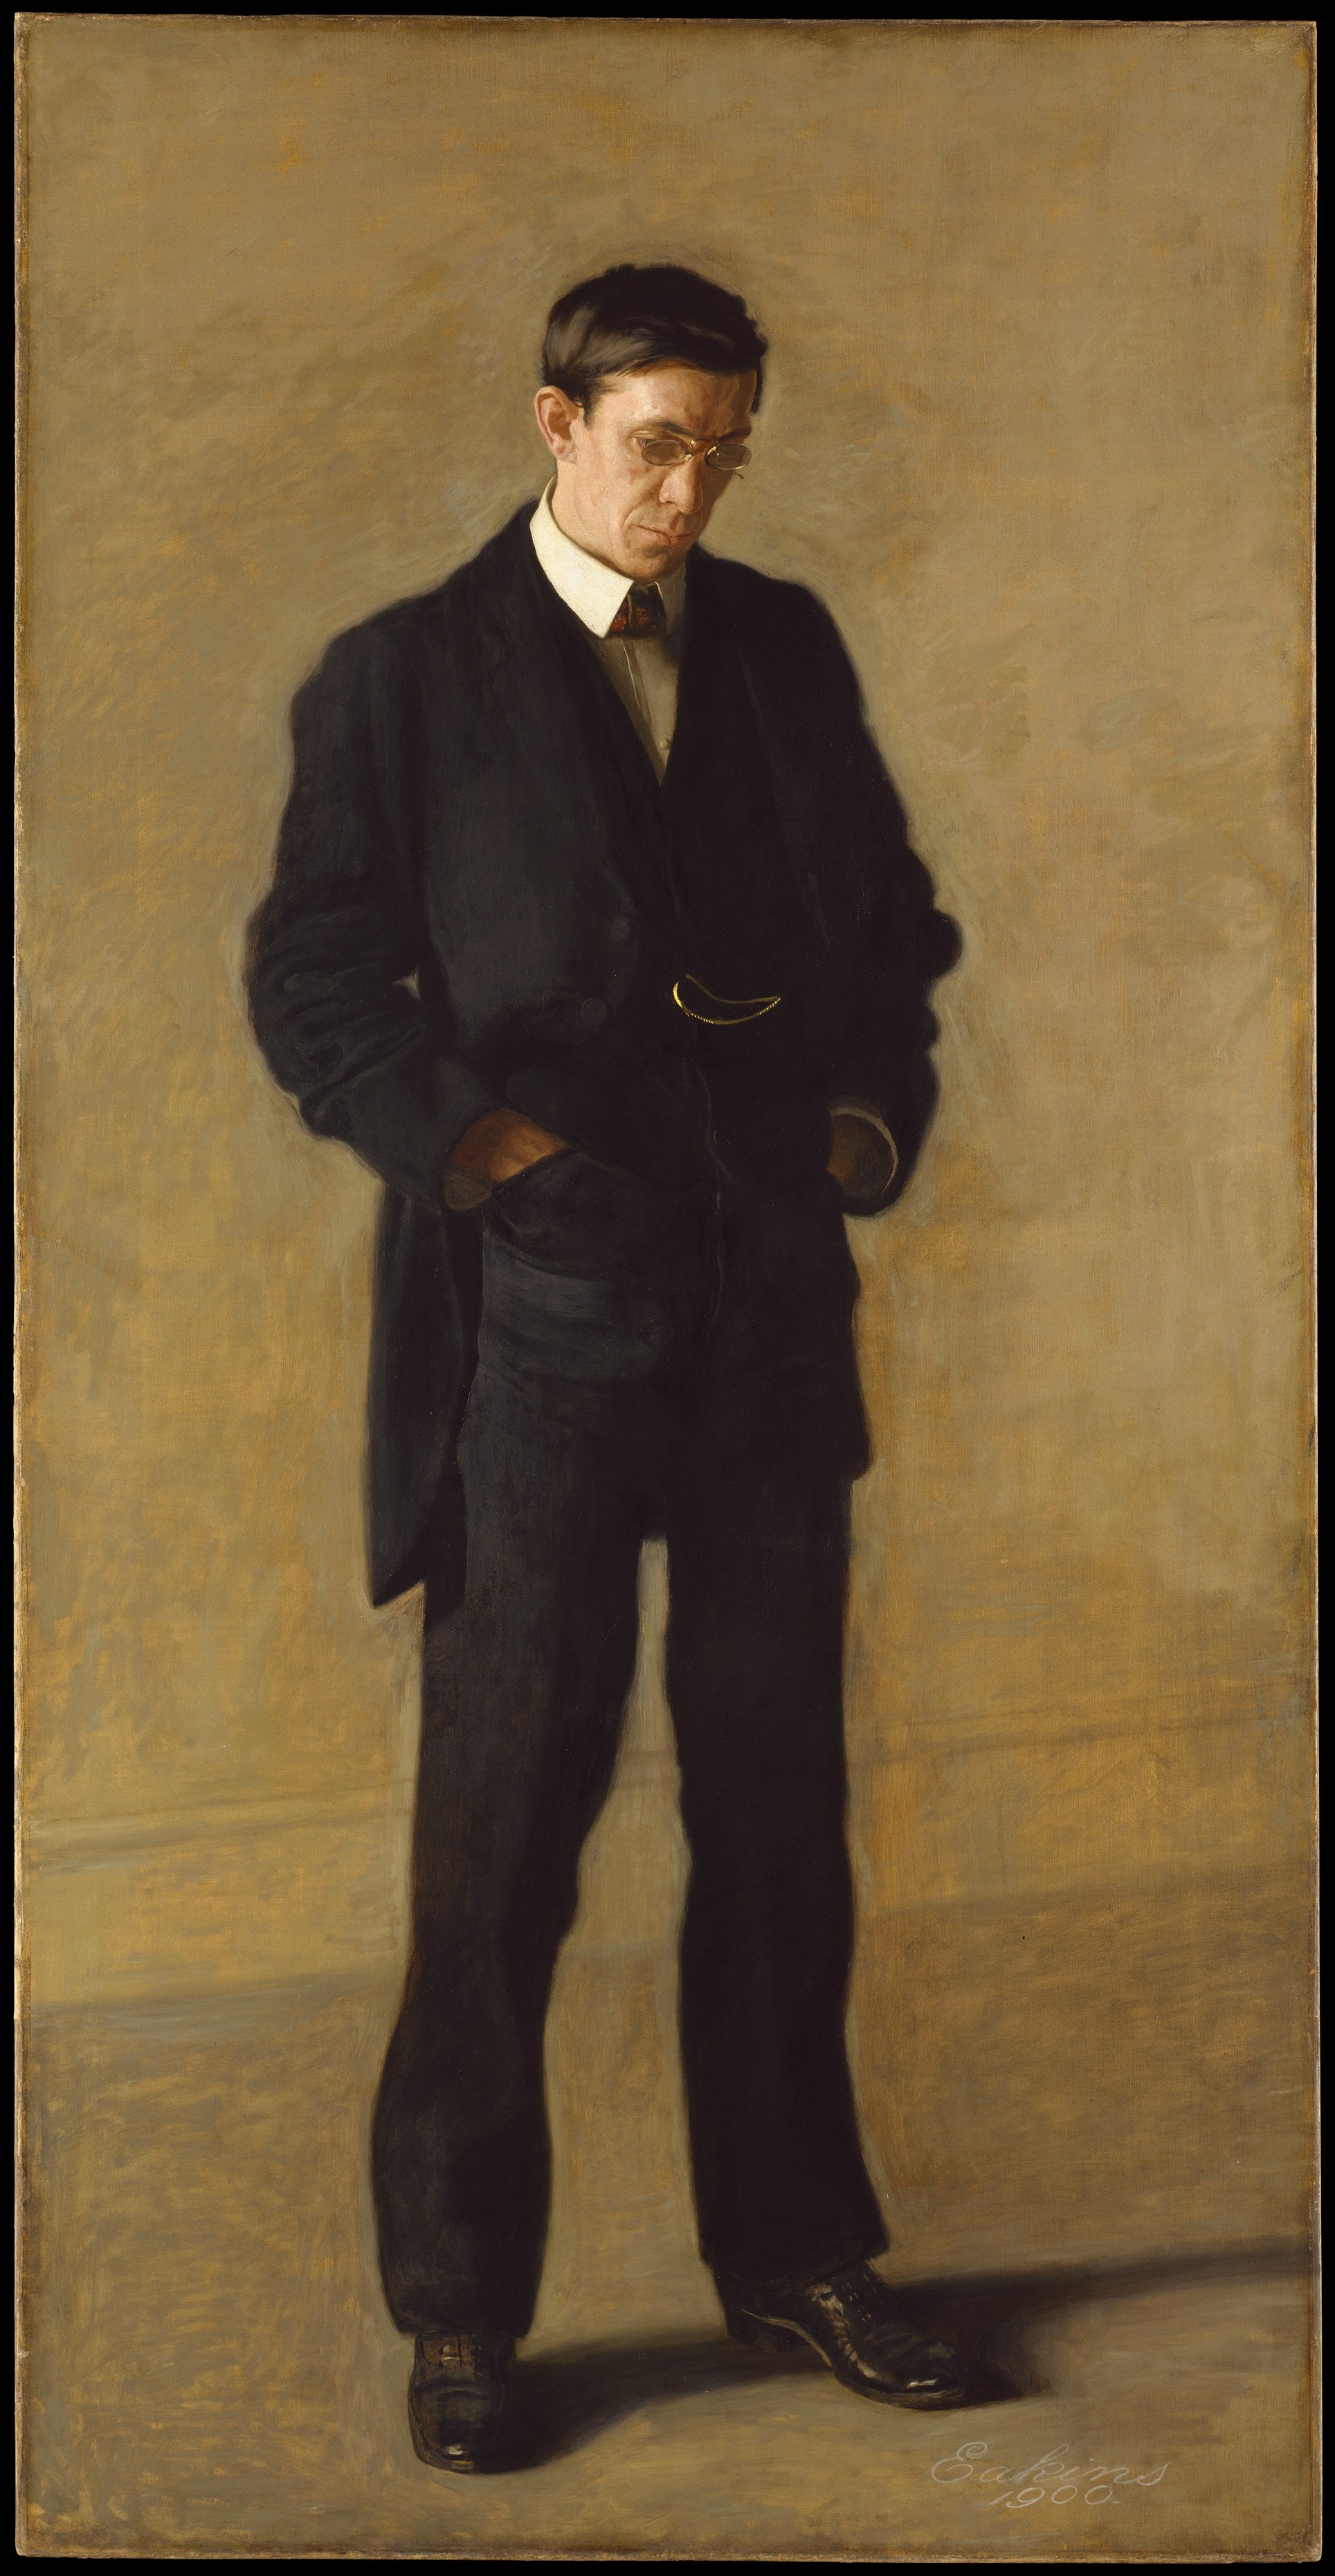 The Thinker: Portrait of Louis N. Kenton by Thomas Eakins - 1900 - 208.3 x 106.7 cm Metropolitan Museum of Art